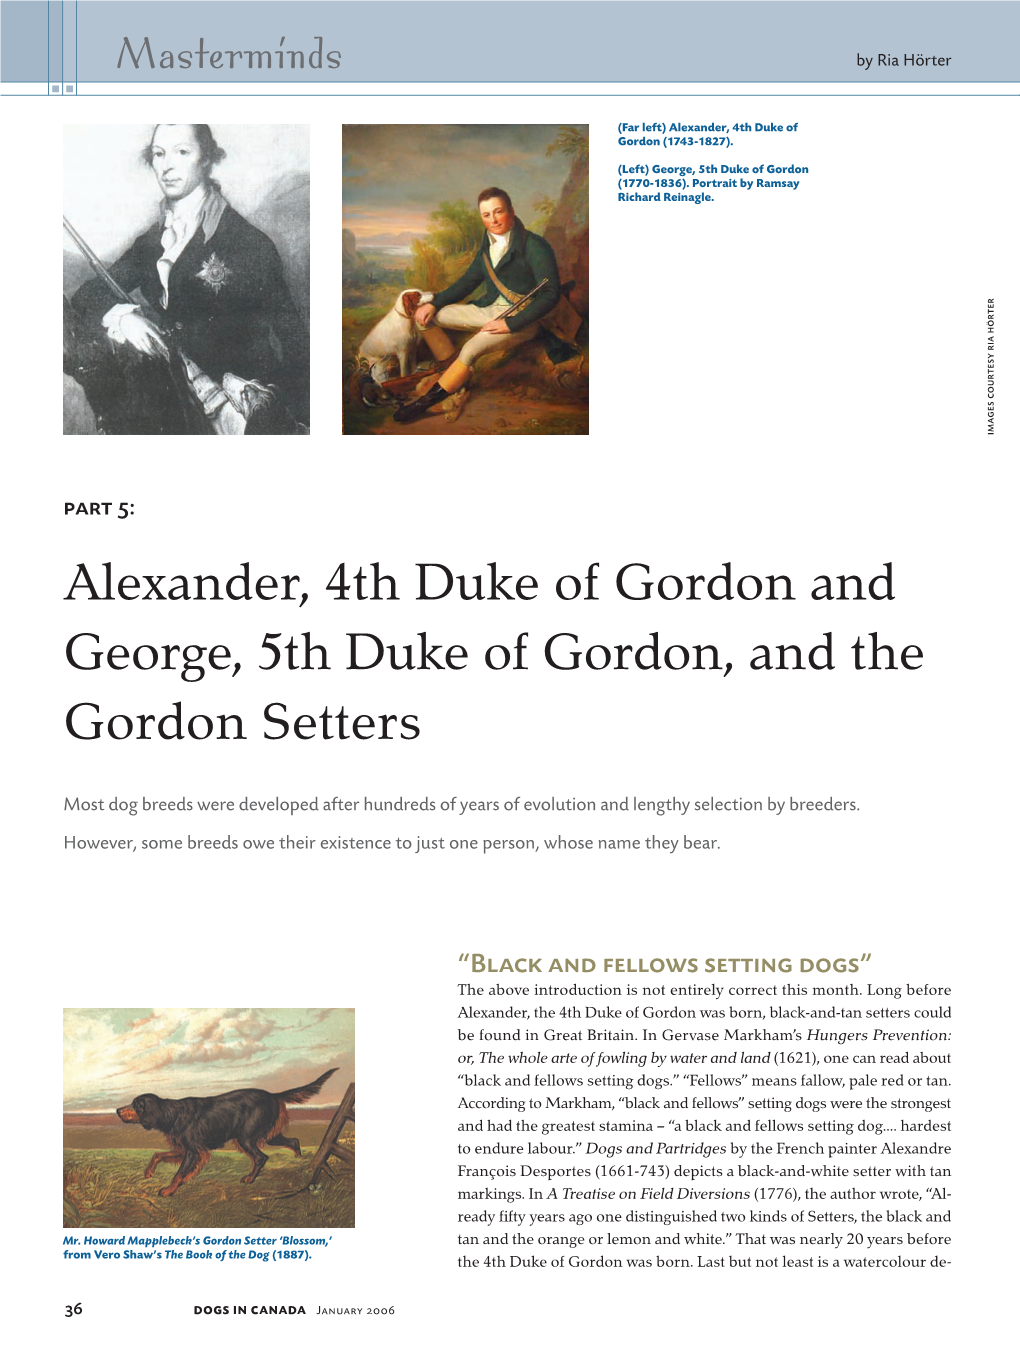 Alexander, 4Th Duke of Gordon and George, 5Th Duke of Gordon, and the Gordon Setters